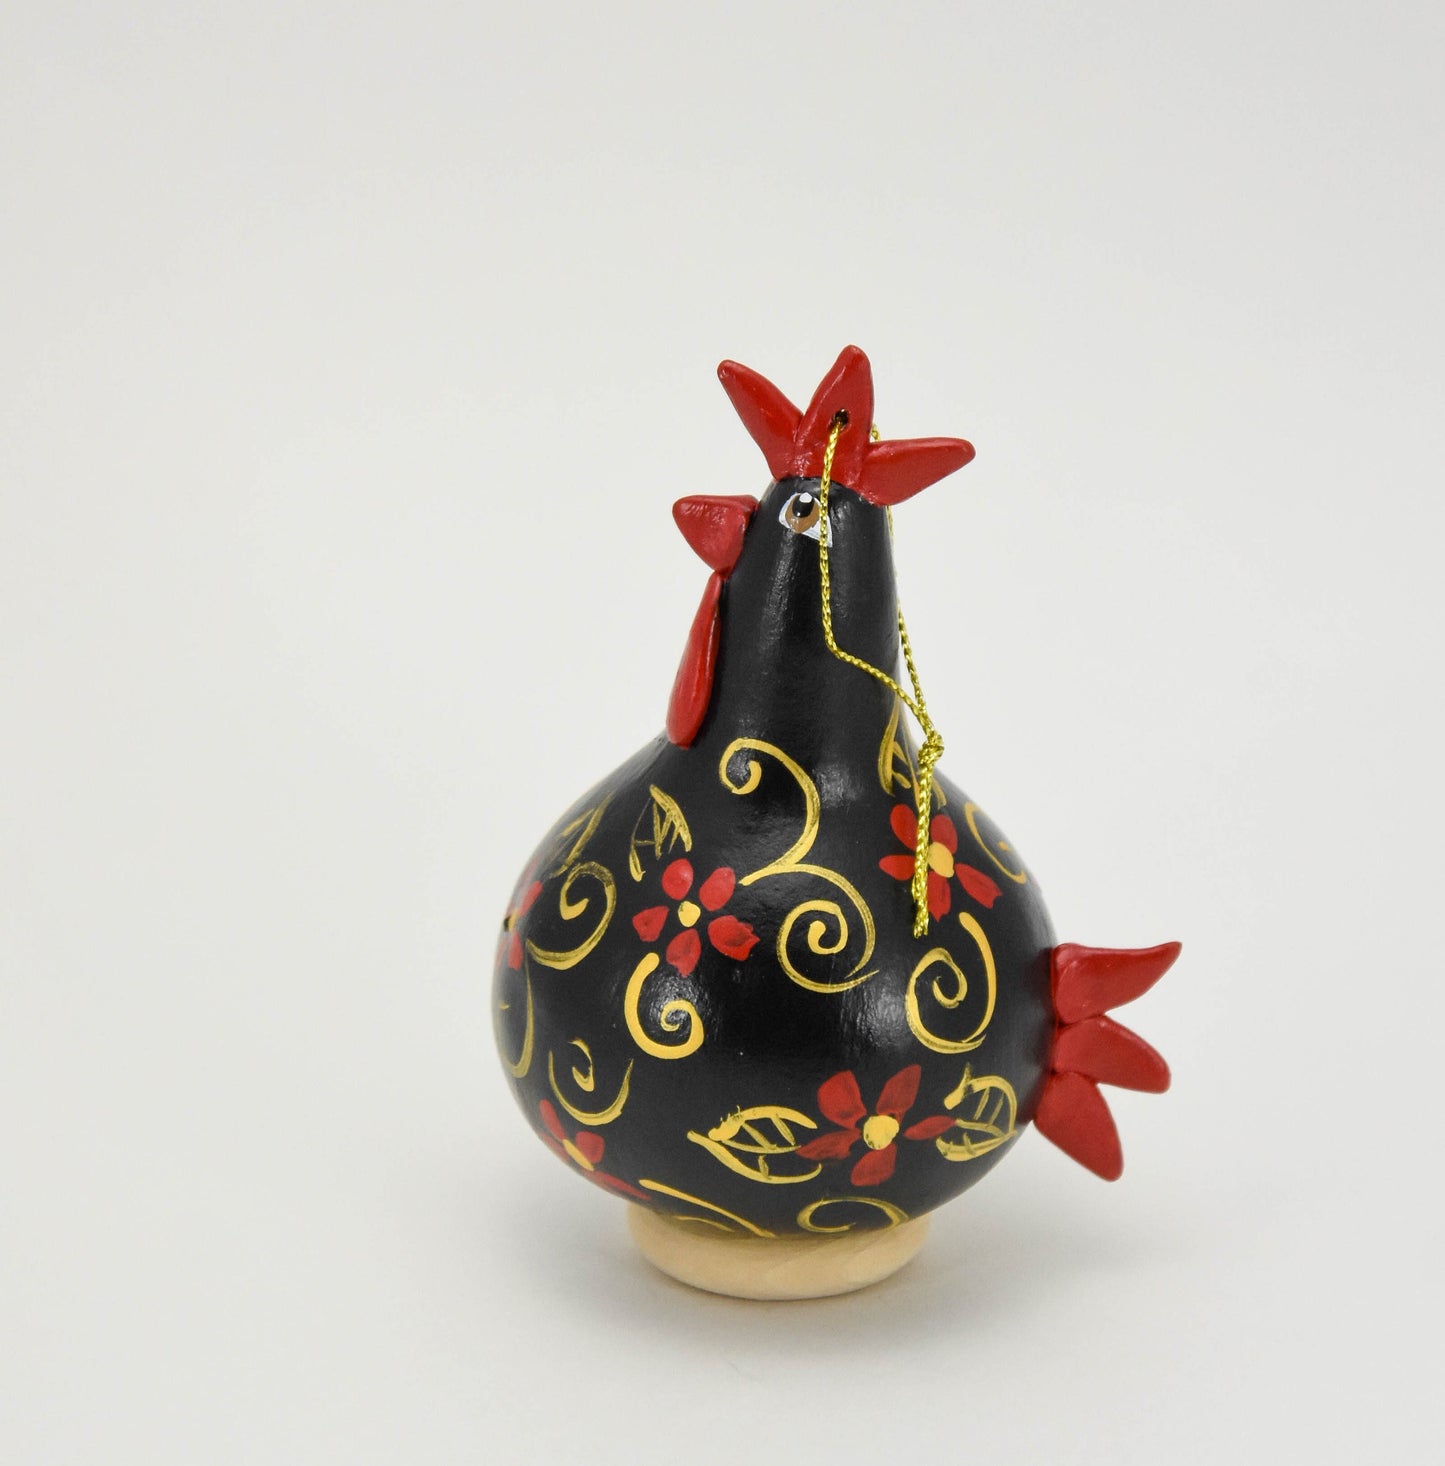 Chicken Christmas Ornament - Australorp chicken - Jersey Giant - Gourd Art